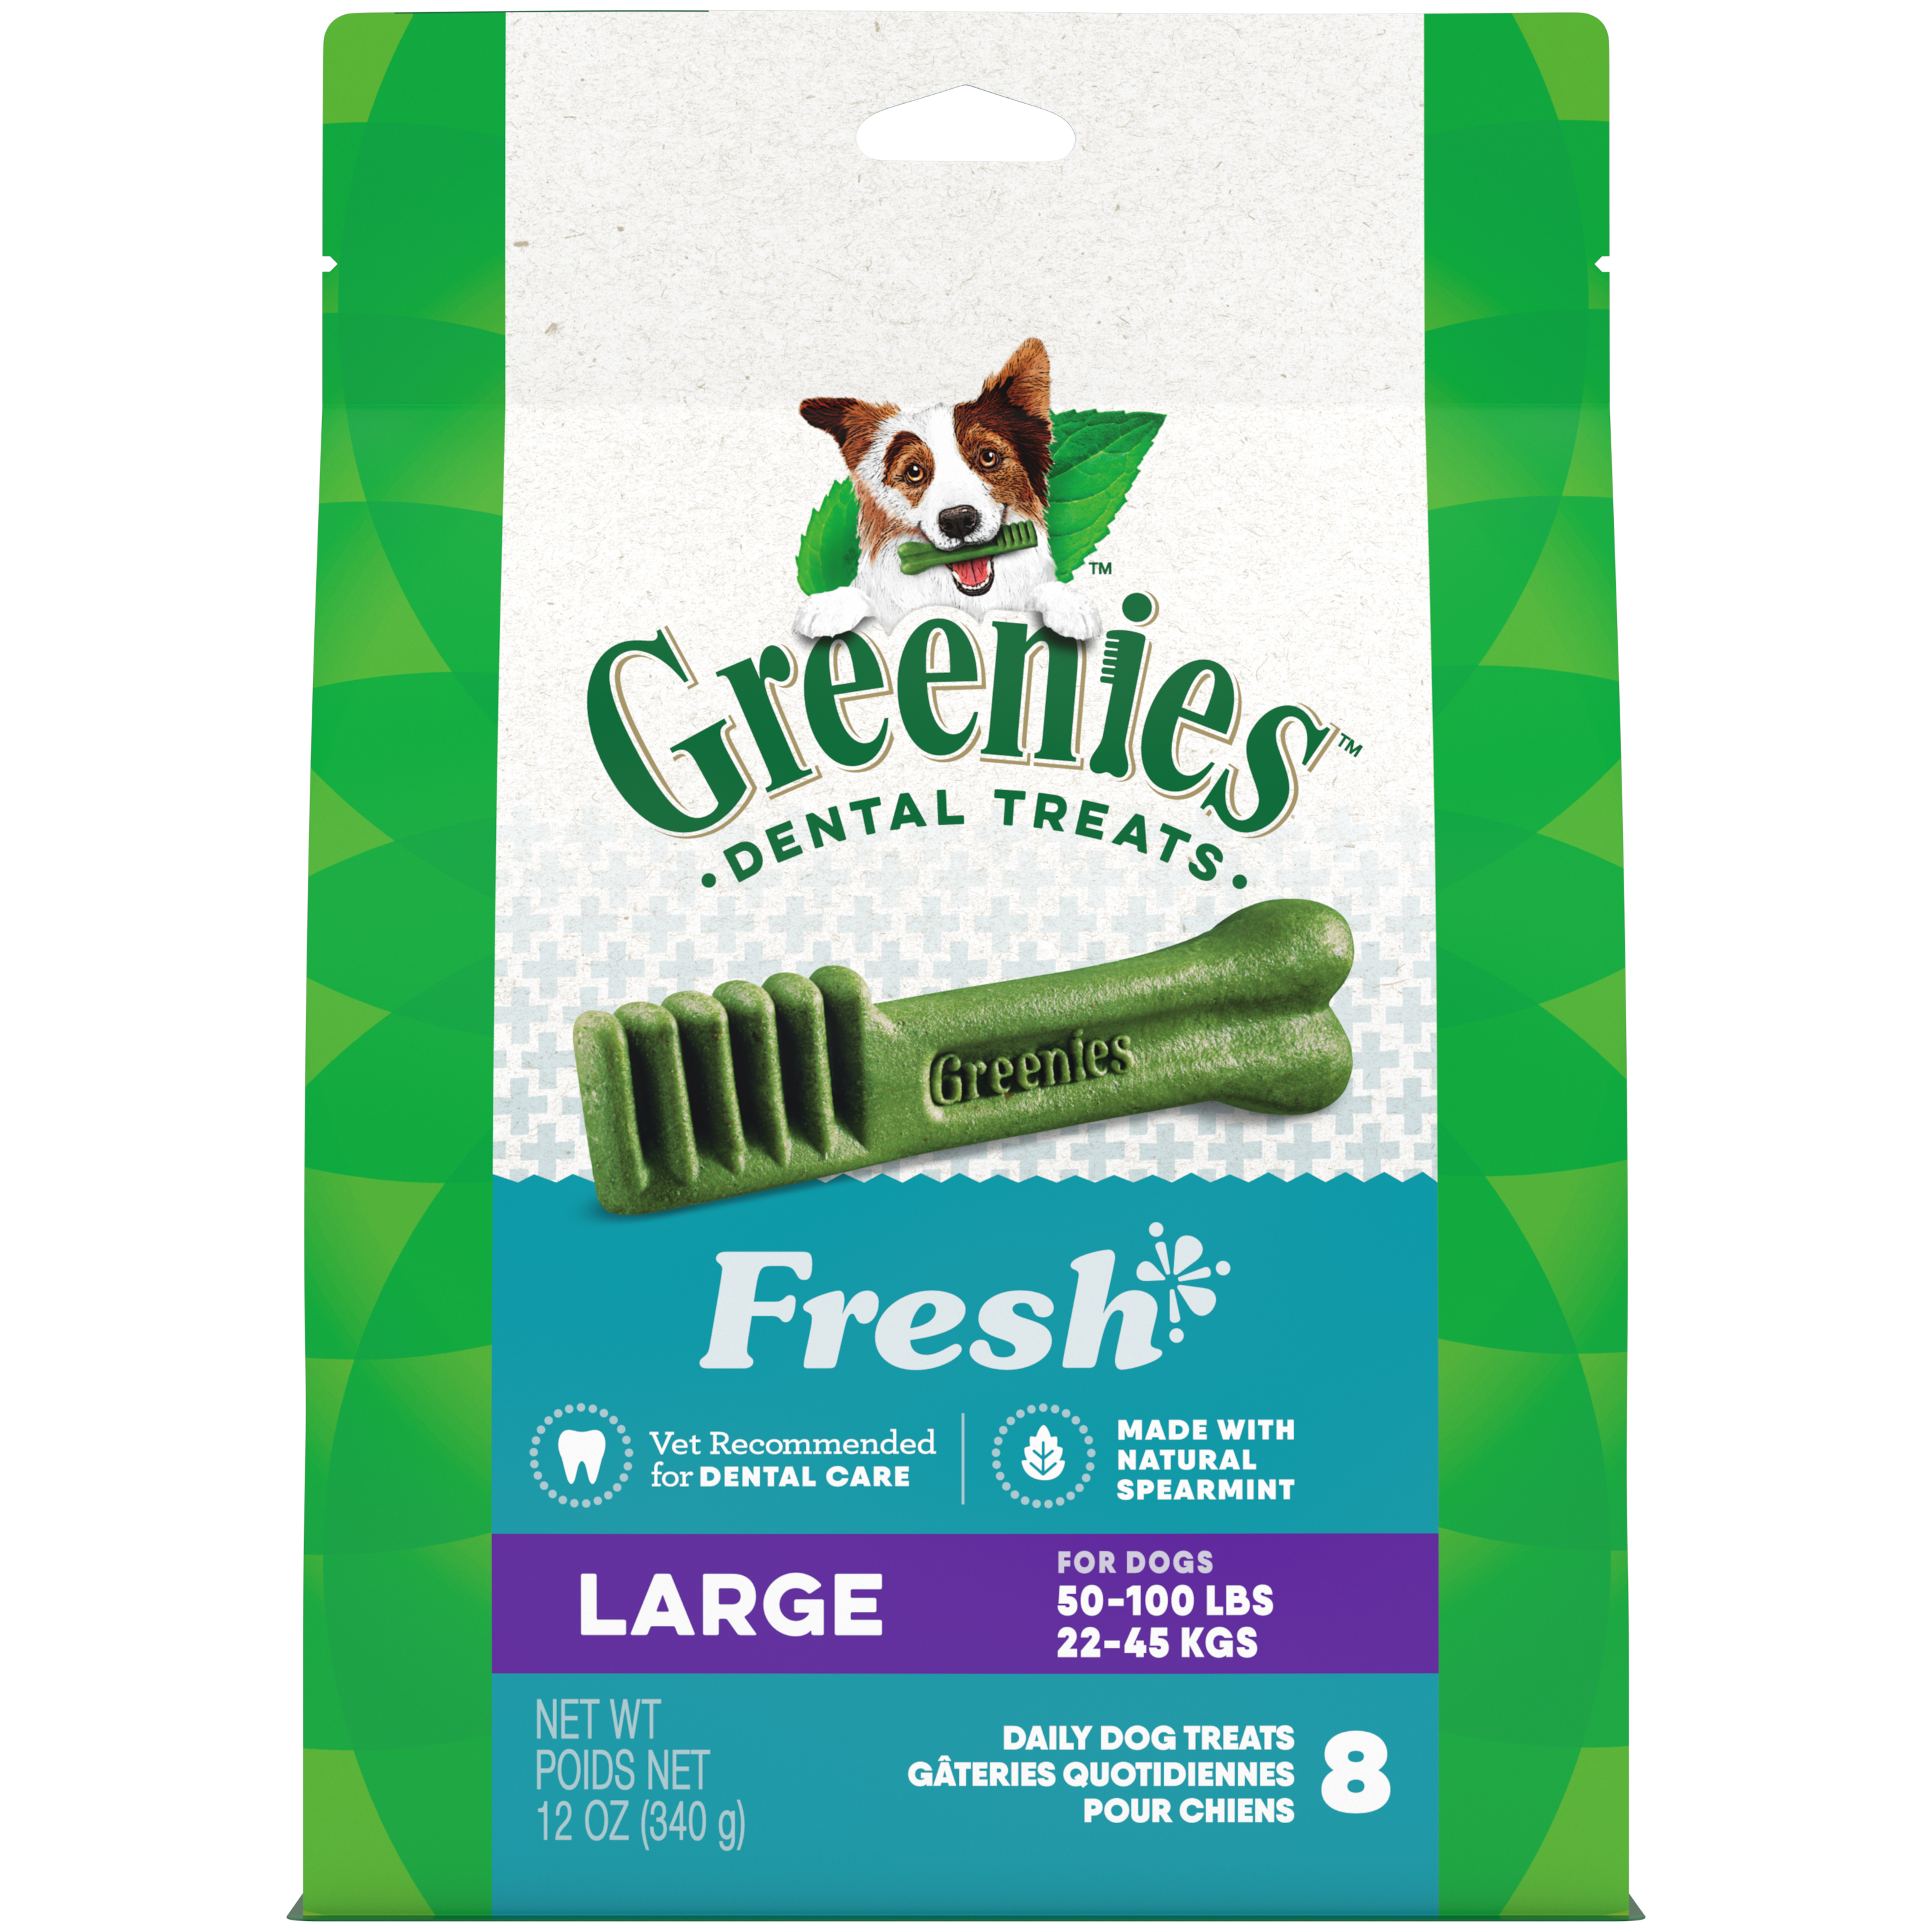 12 oz. Greenies Large Fresh Treat Pack - Health/First Aid